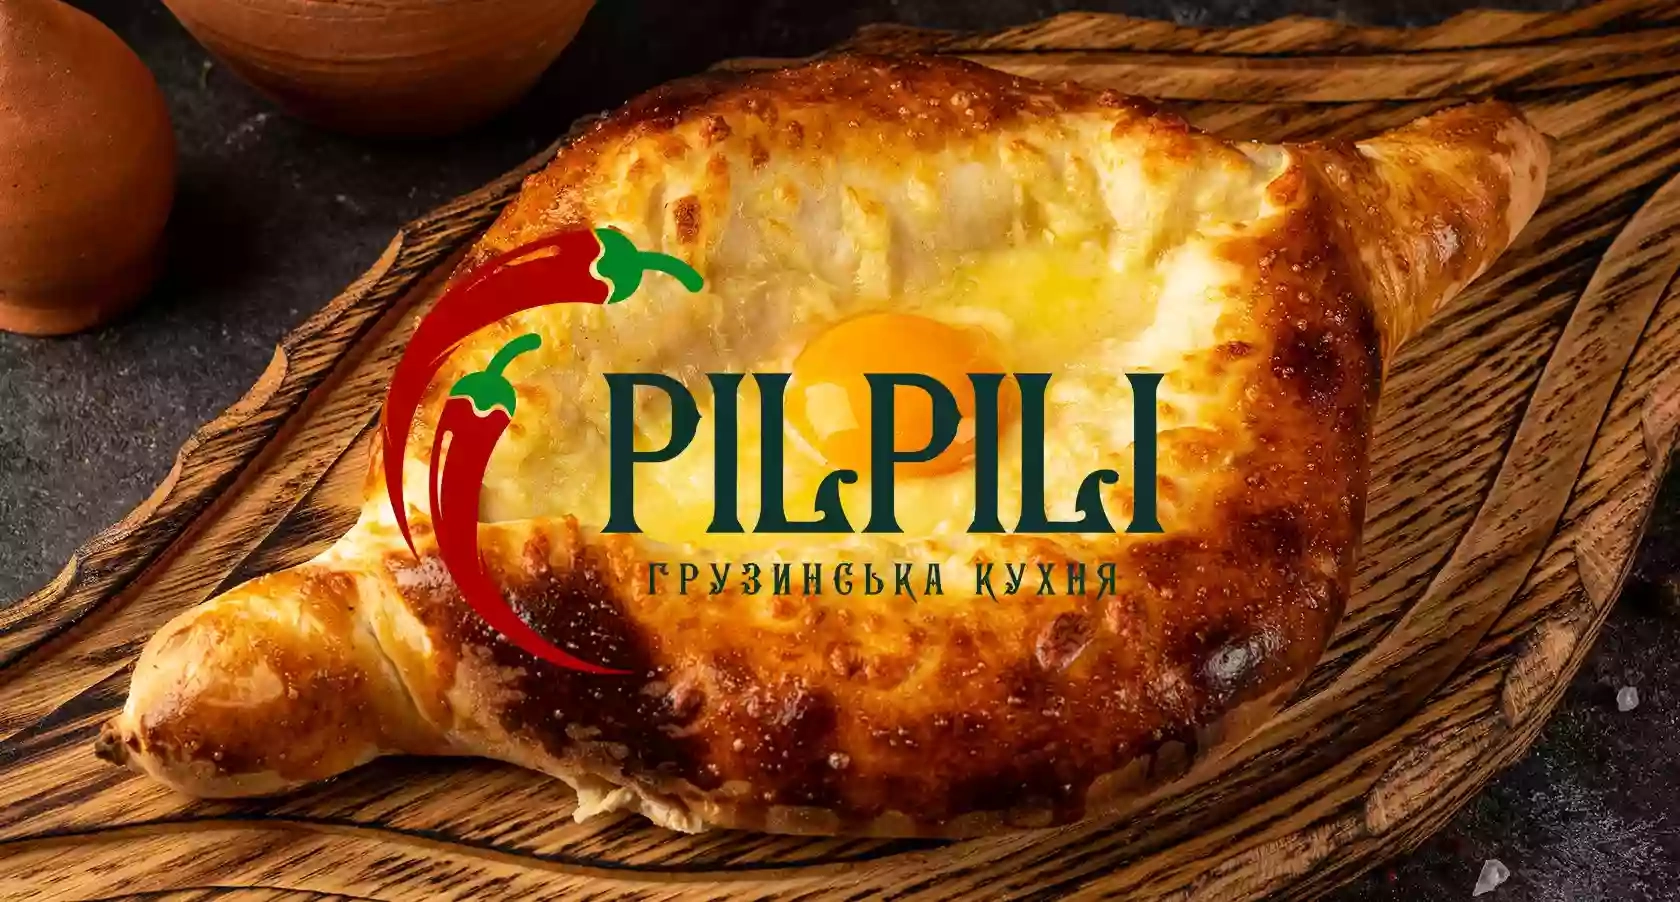 Pilpili - ресторан грузинської кухні